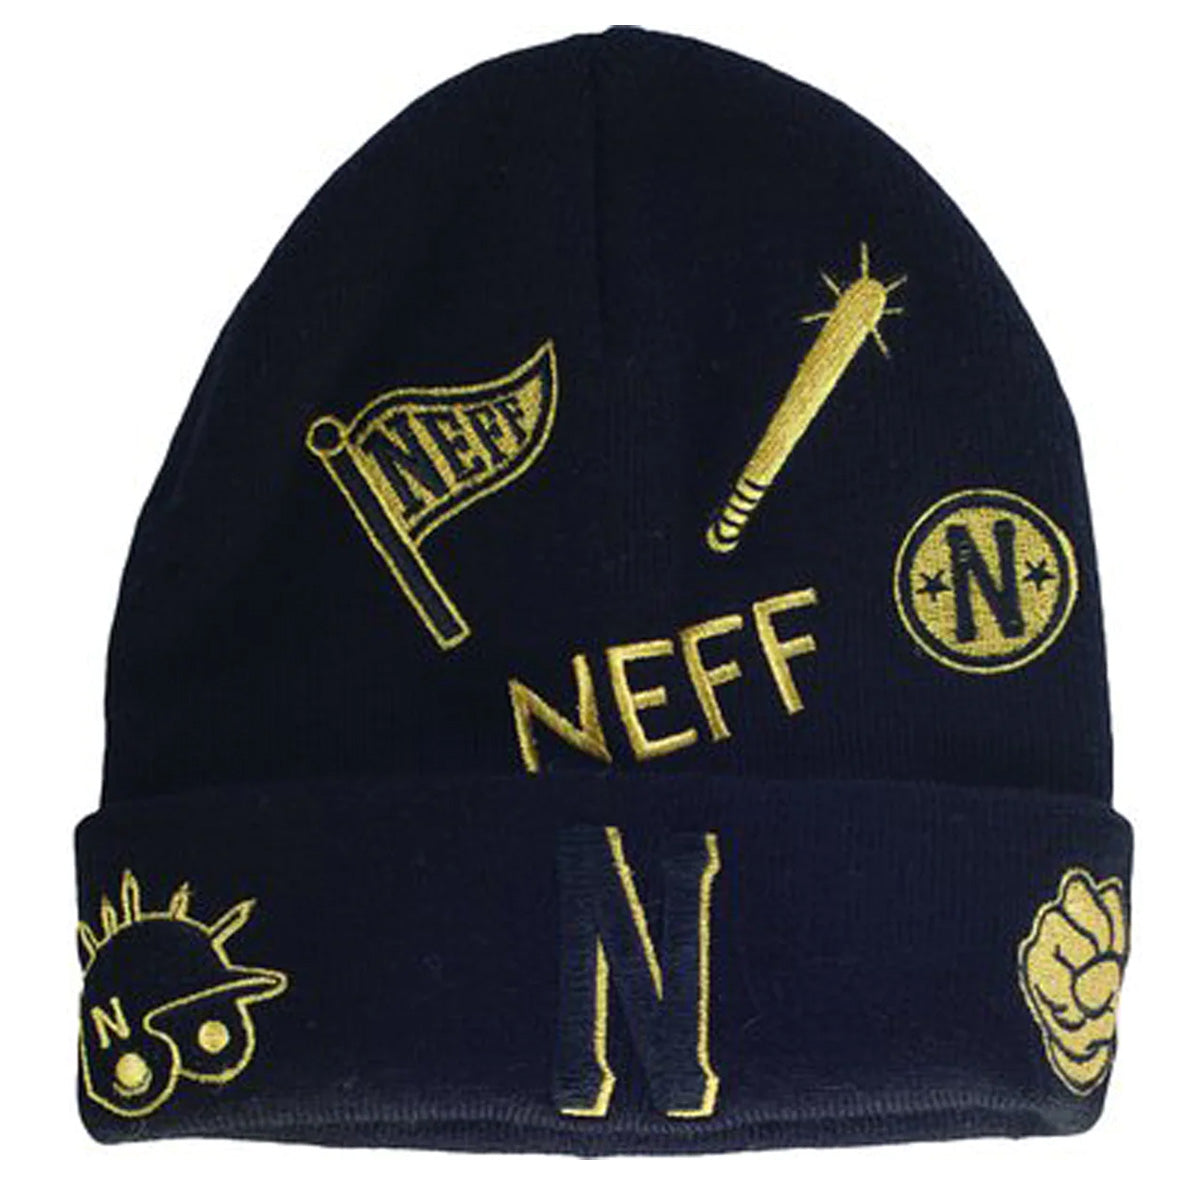 Neff Sportmanship Men's Beanie Hats 